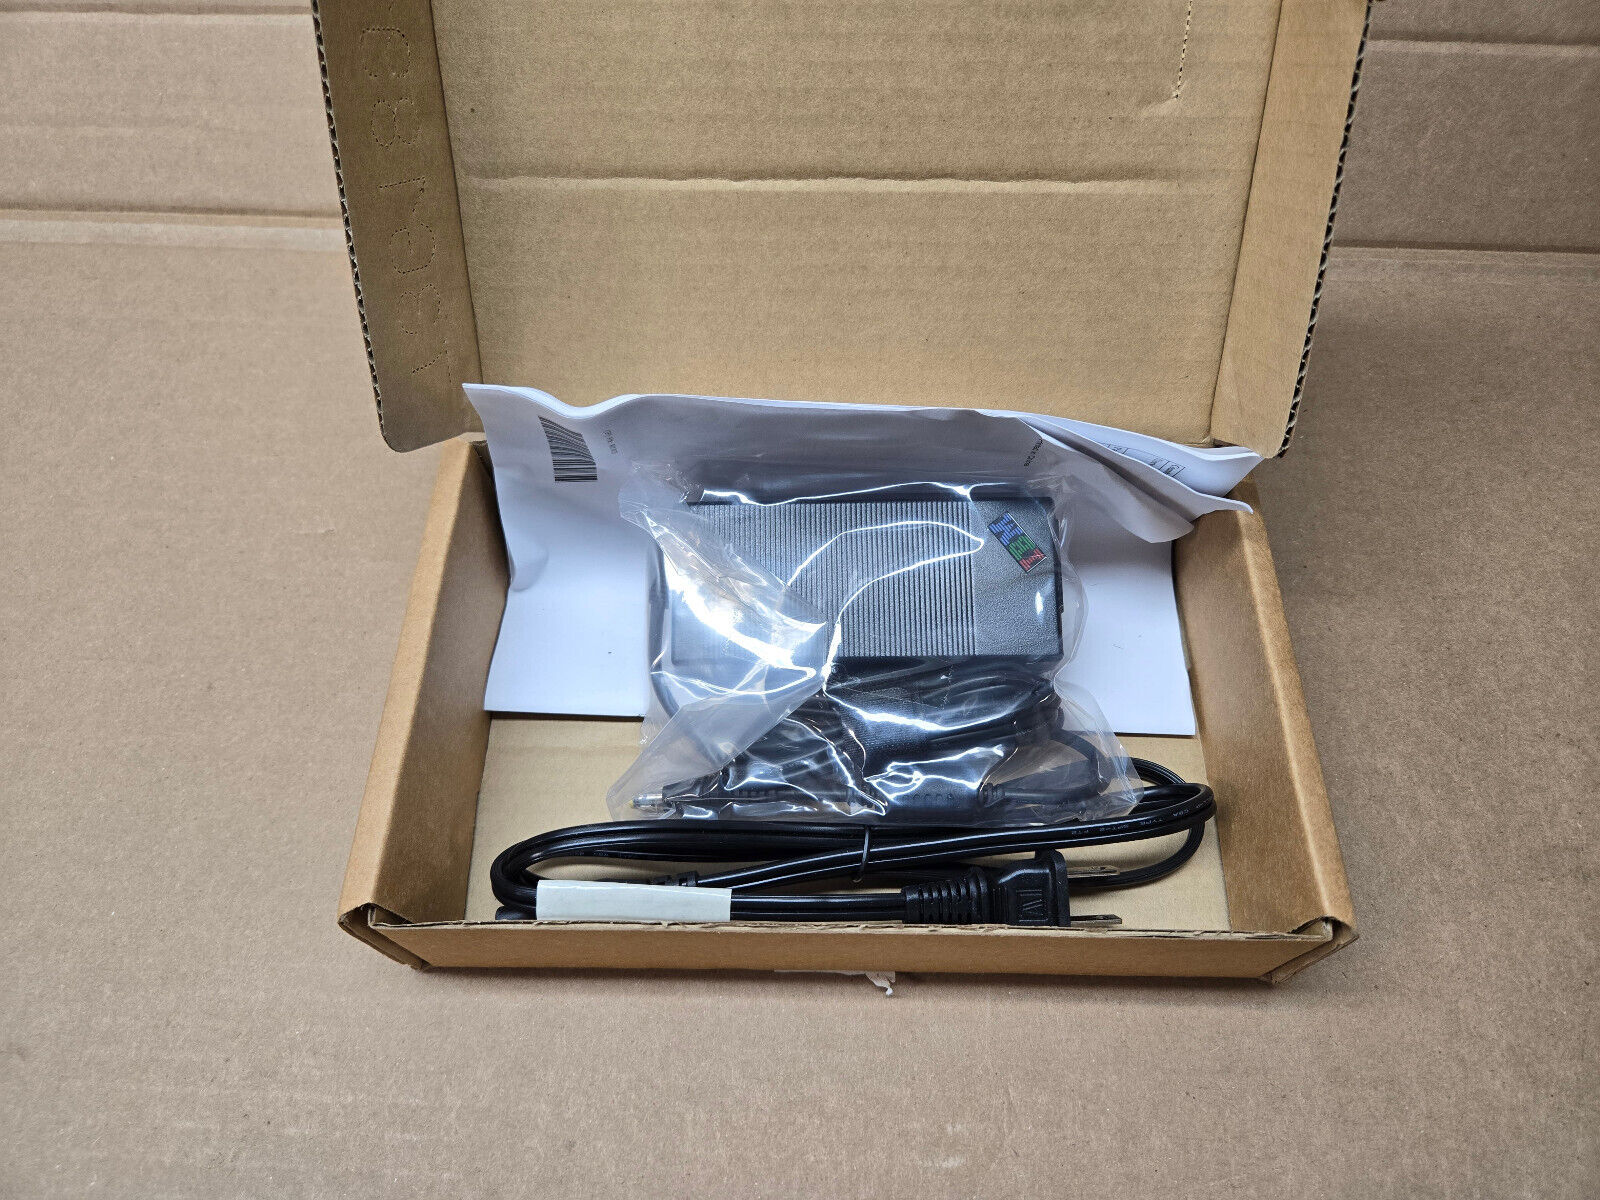 (Lot of 6) IBM ThinkPad 72W AC Adapter 02K6699 New